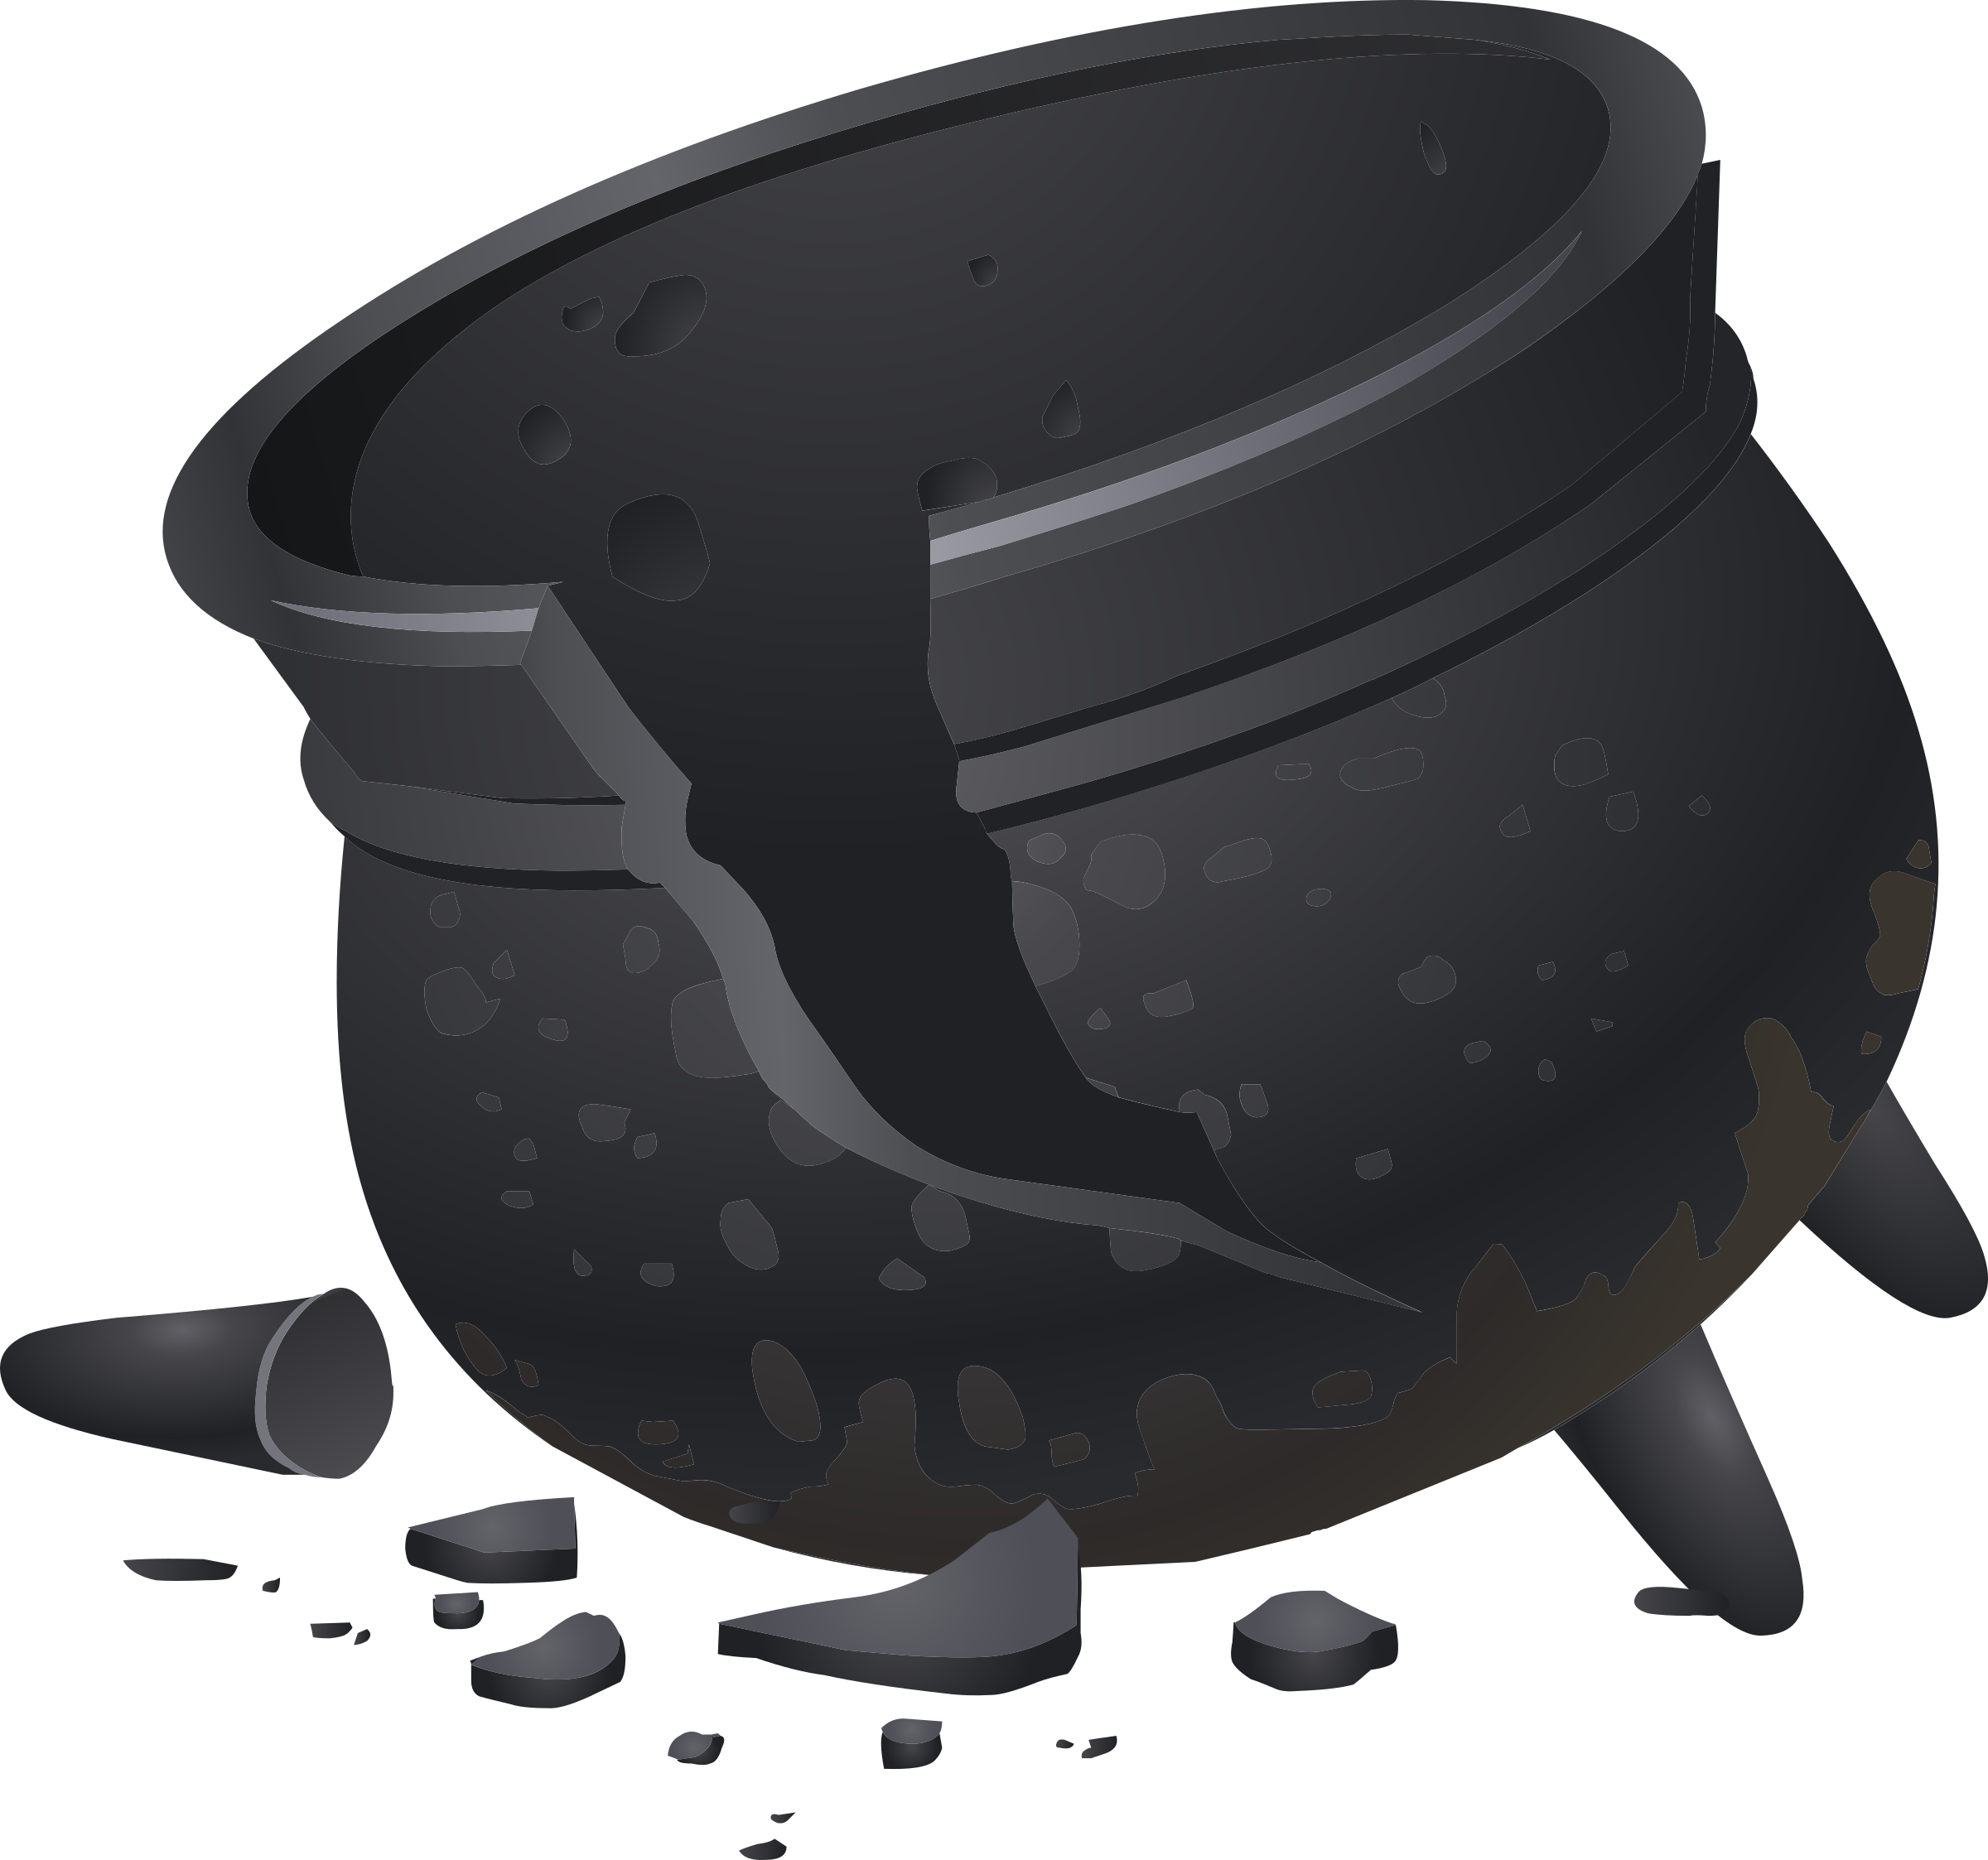 cauldron clipart bubbling cauldron